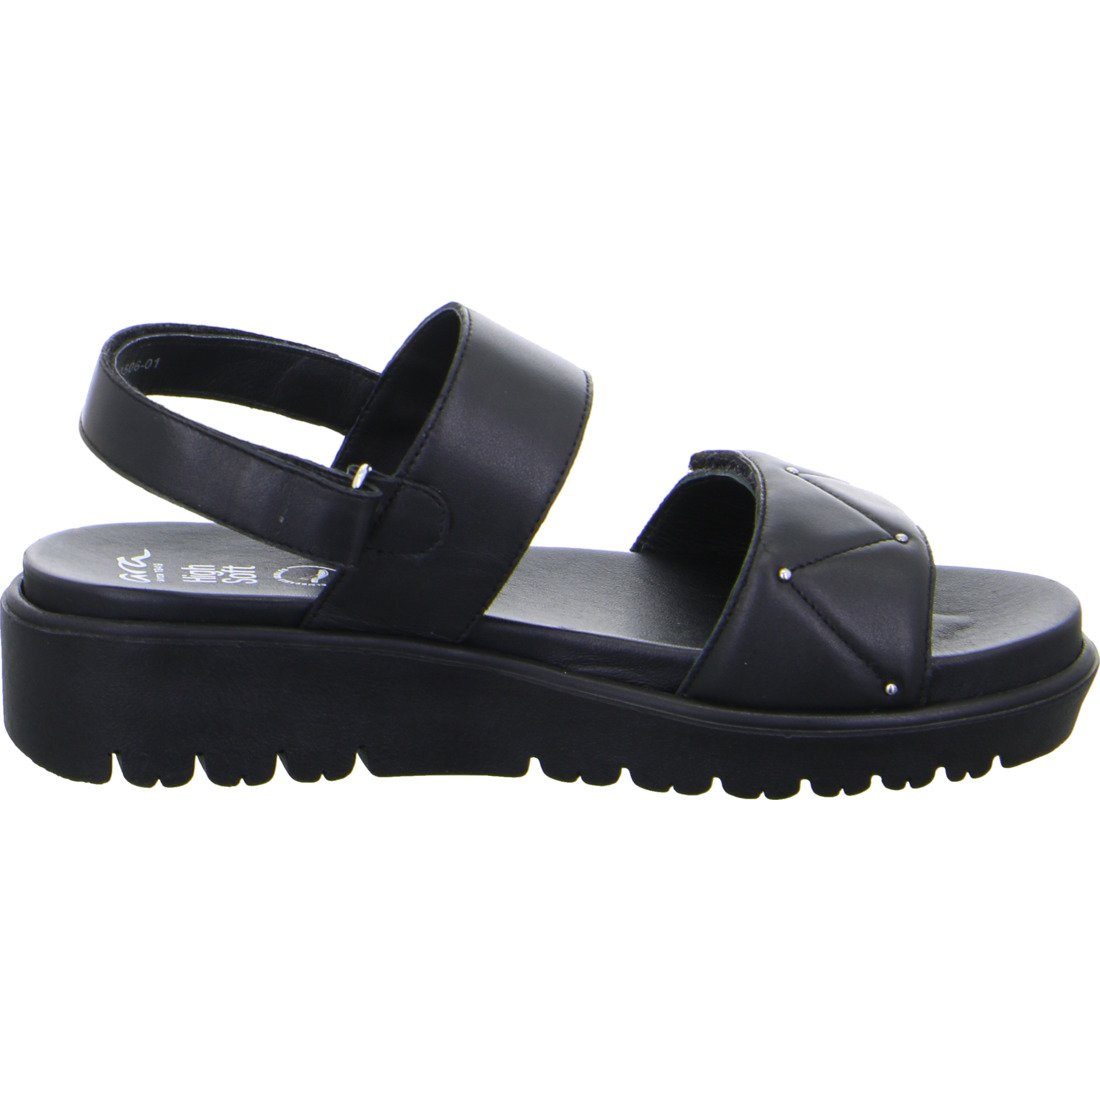 Ara Ara Schuhe, Sandalette Bilbao schwarz Glattleder 048120 - Sandalette